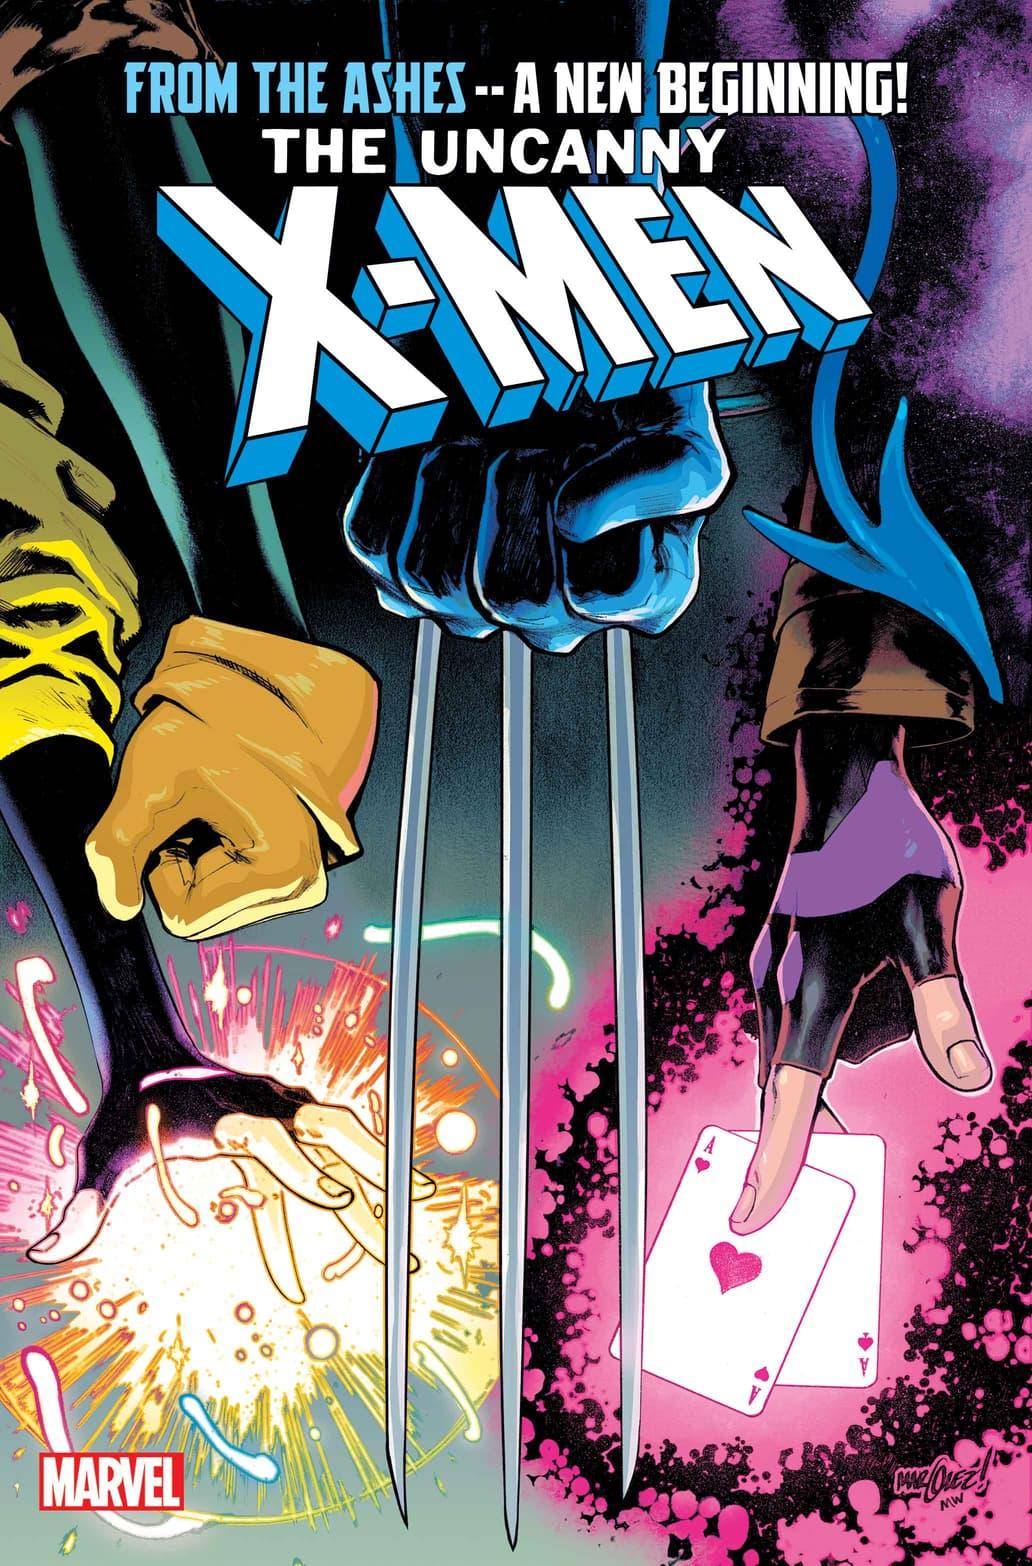 Uncanny X-Men #1 cover art